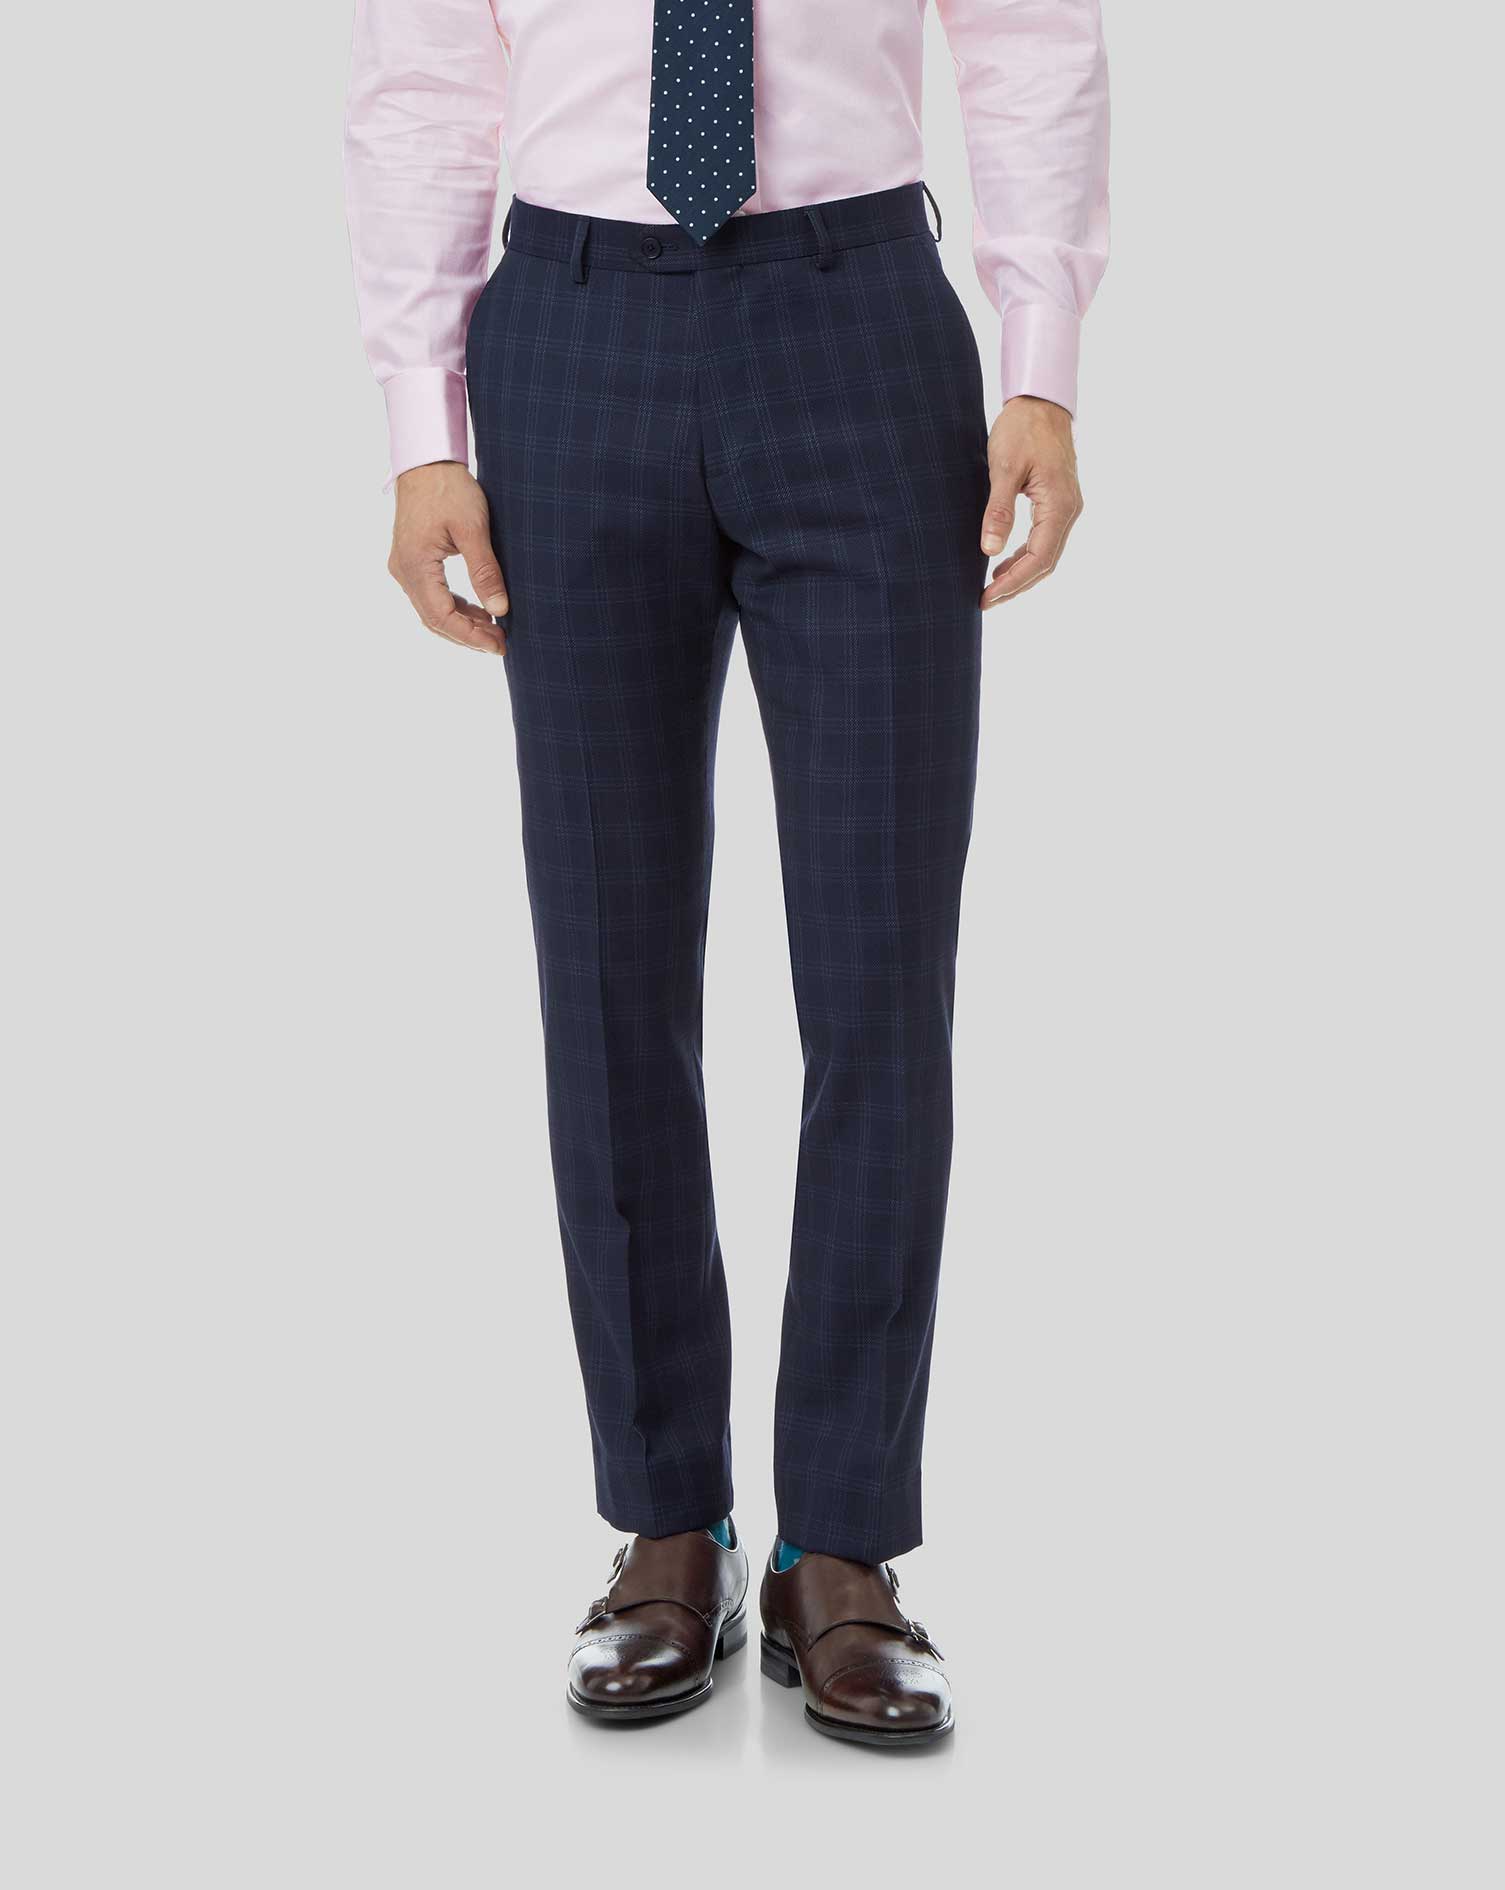 Men's Charles Tyrwhitt Check Birdseye Travel Suit Trousers - Navy Blue Size 36/38 Wool
